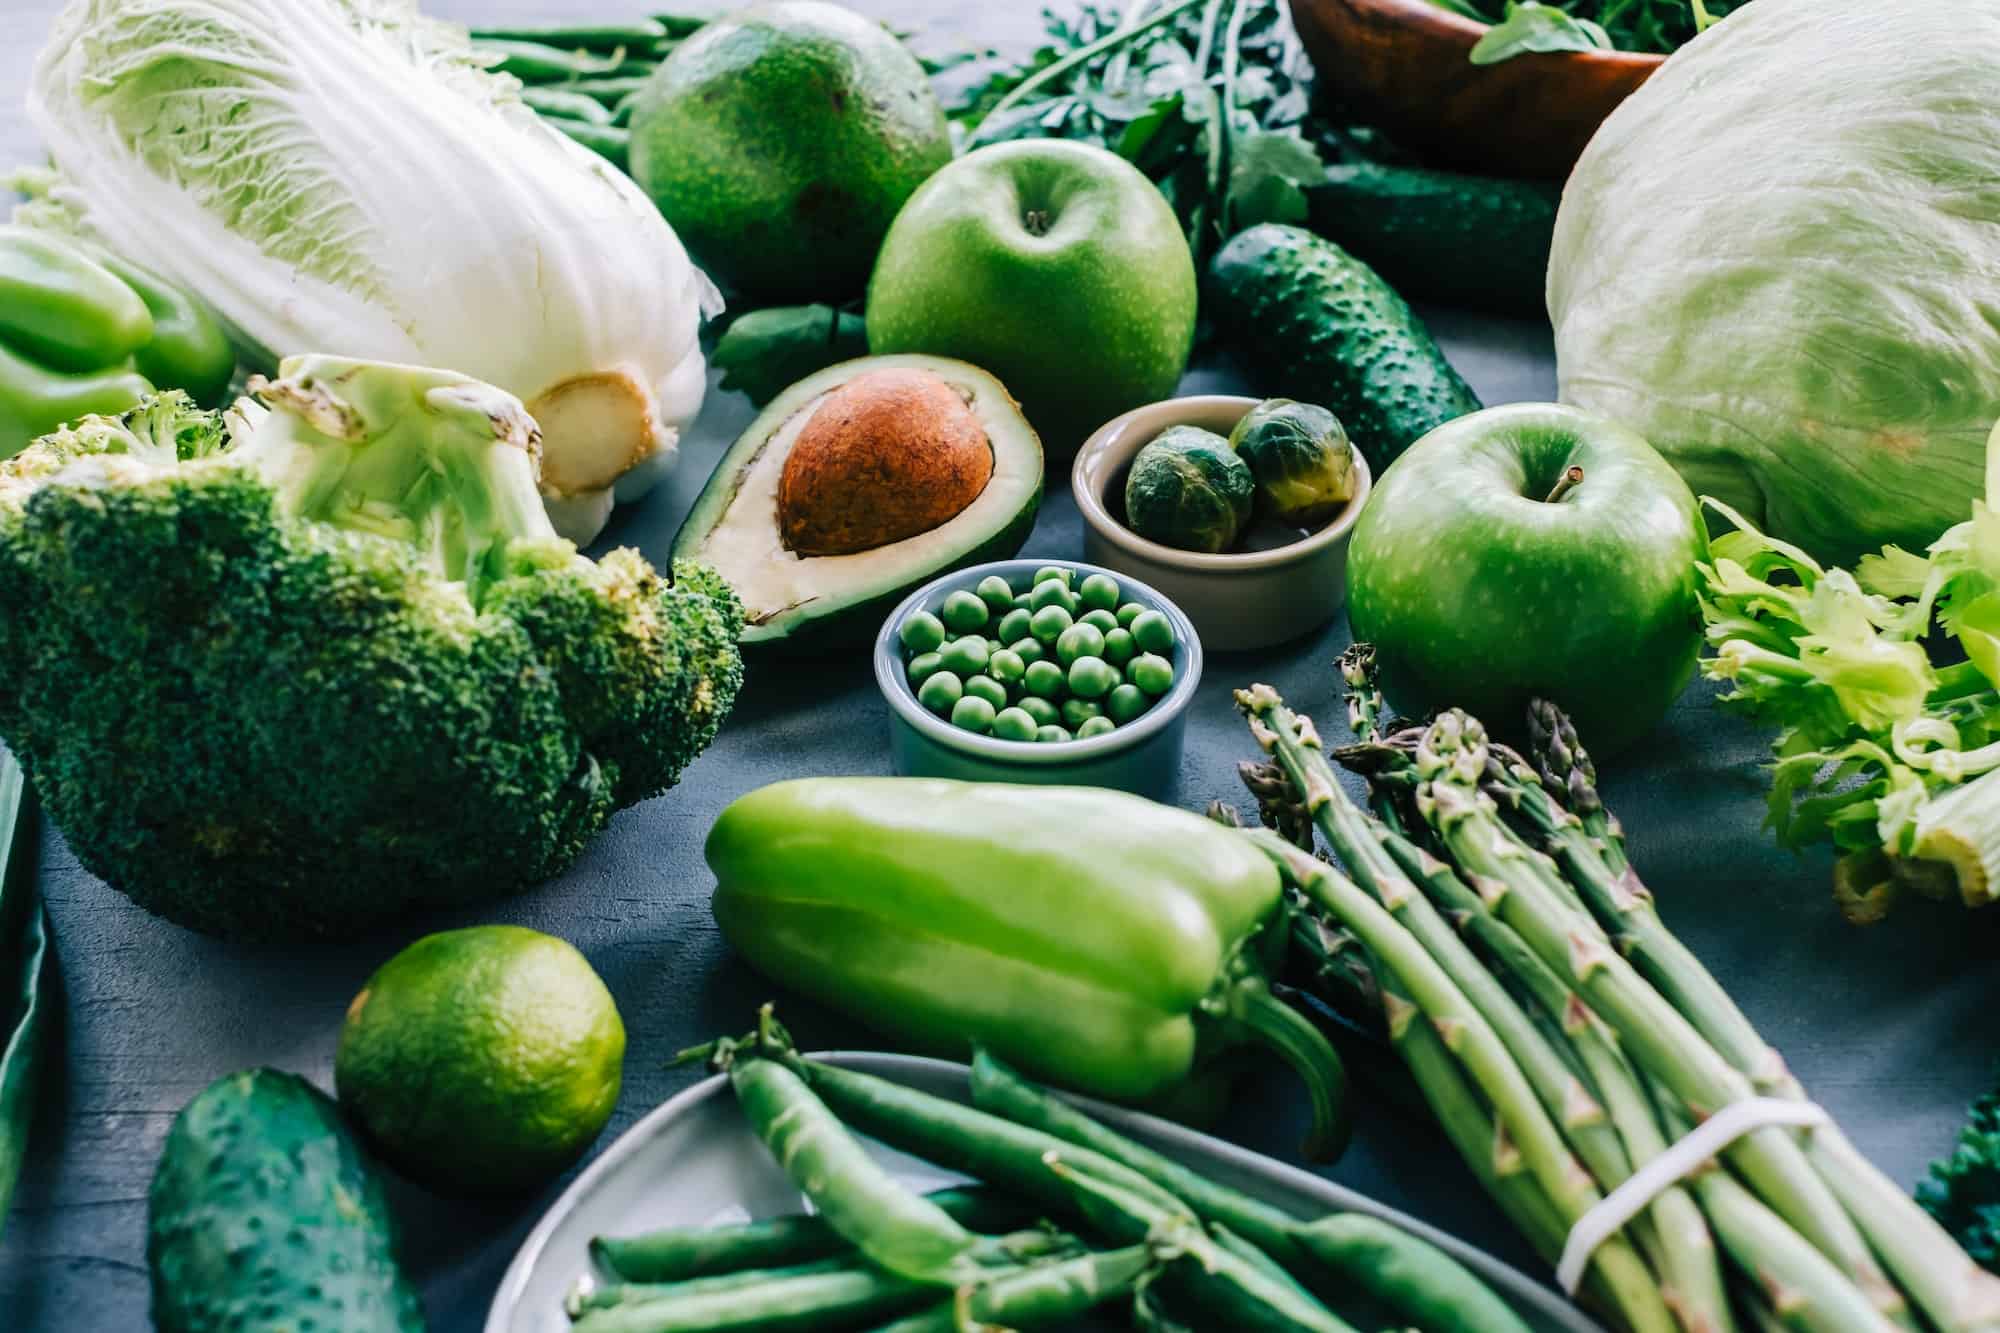 Healthy organic green food, assortment of fresh vegetables